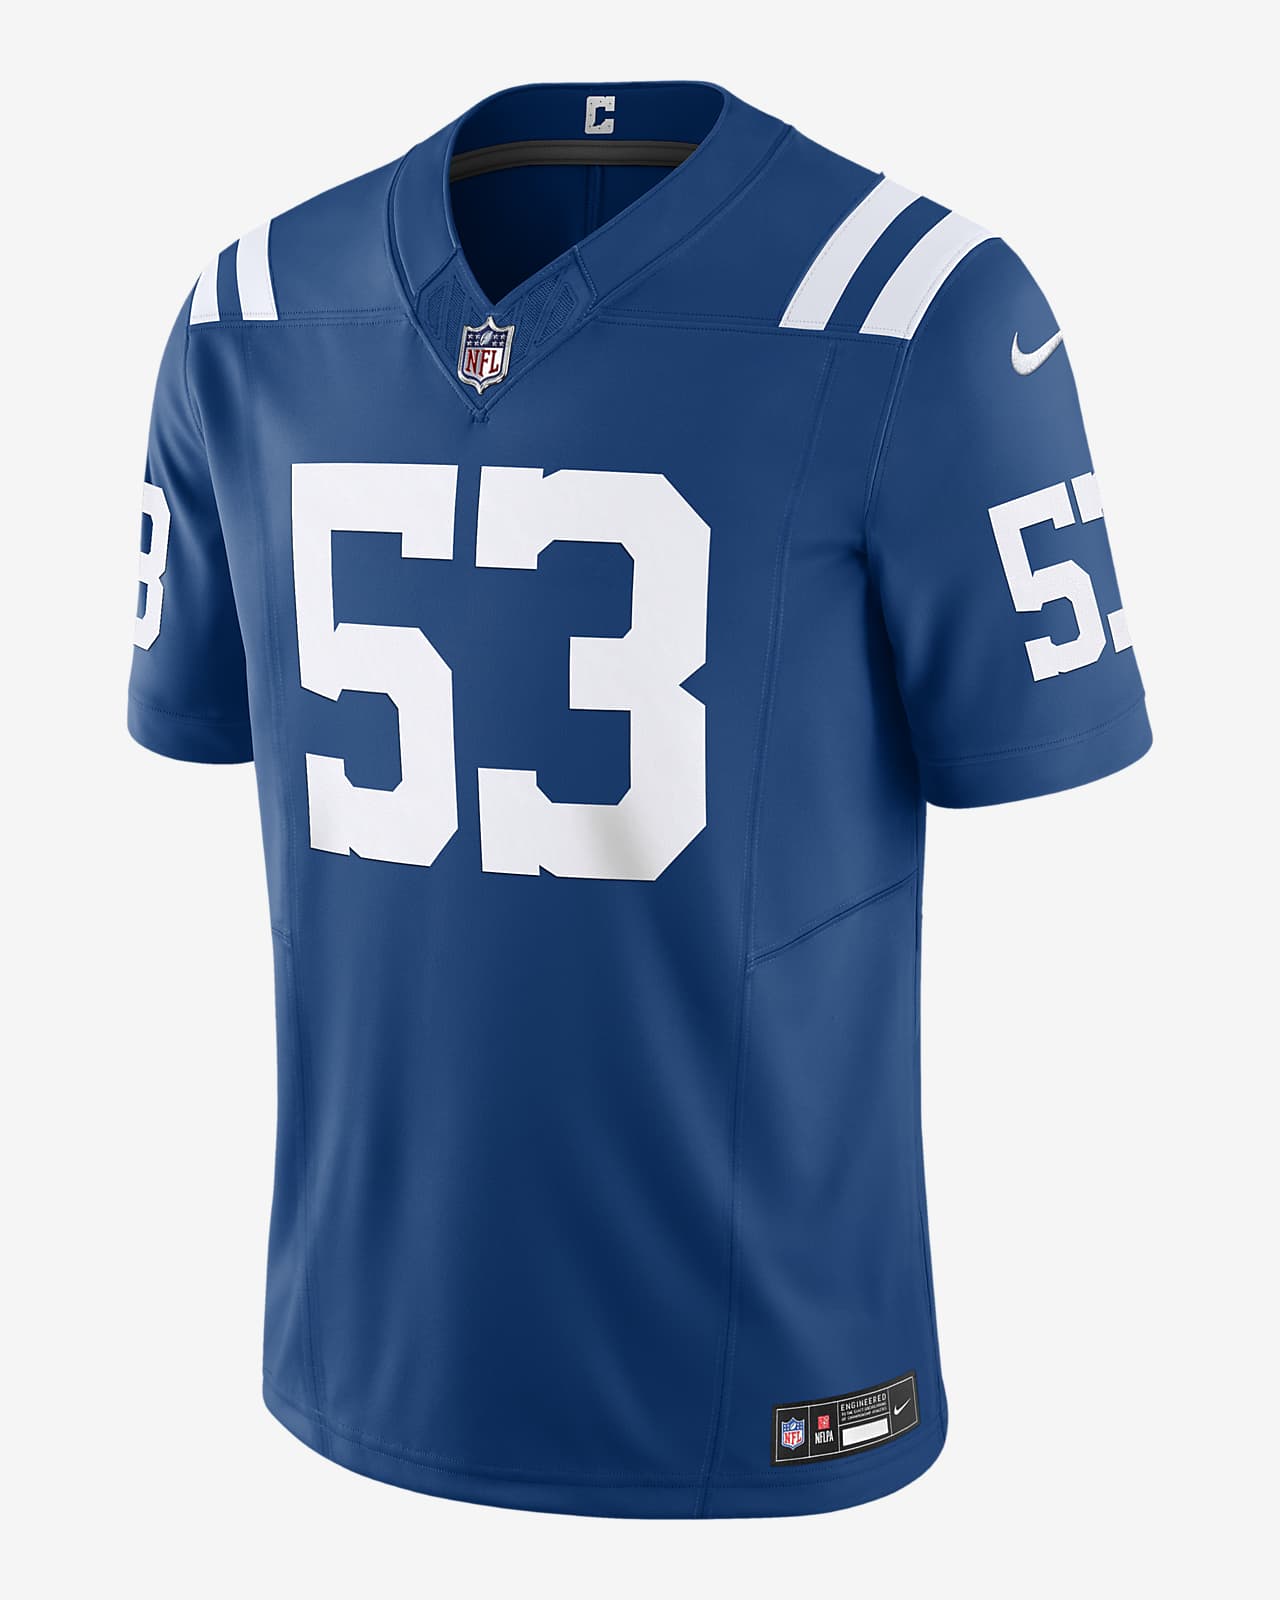 Jersey de fútbol americano Nike Dri-FIT de la NFL Limited para hombre Shaquille Leonard Indianapolis Colts